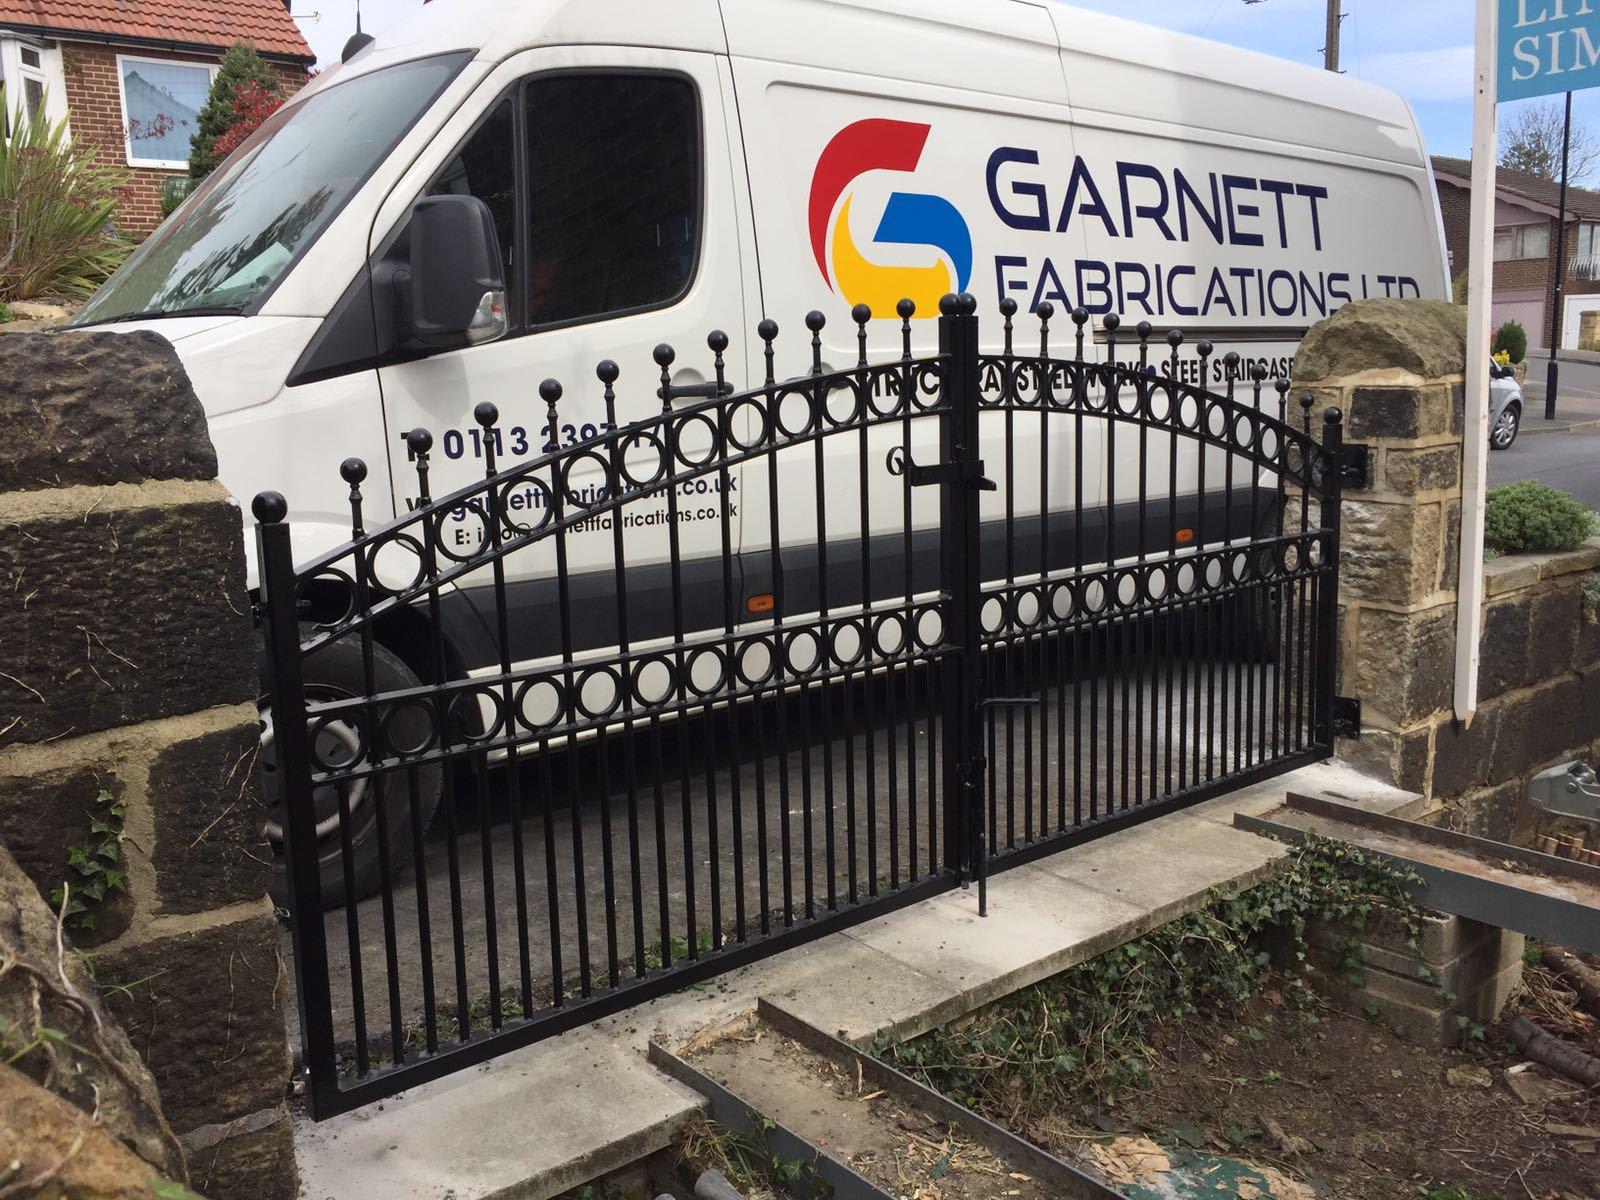 Images Garnett Fabrications Ltd